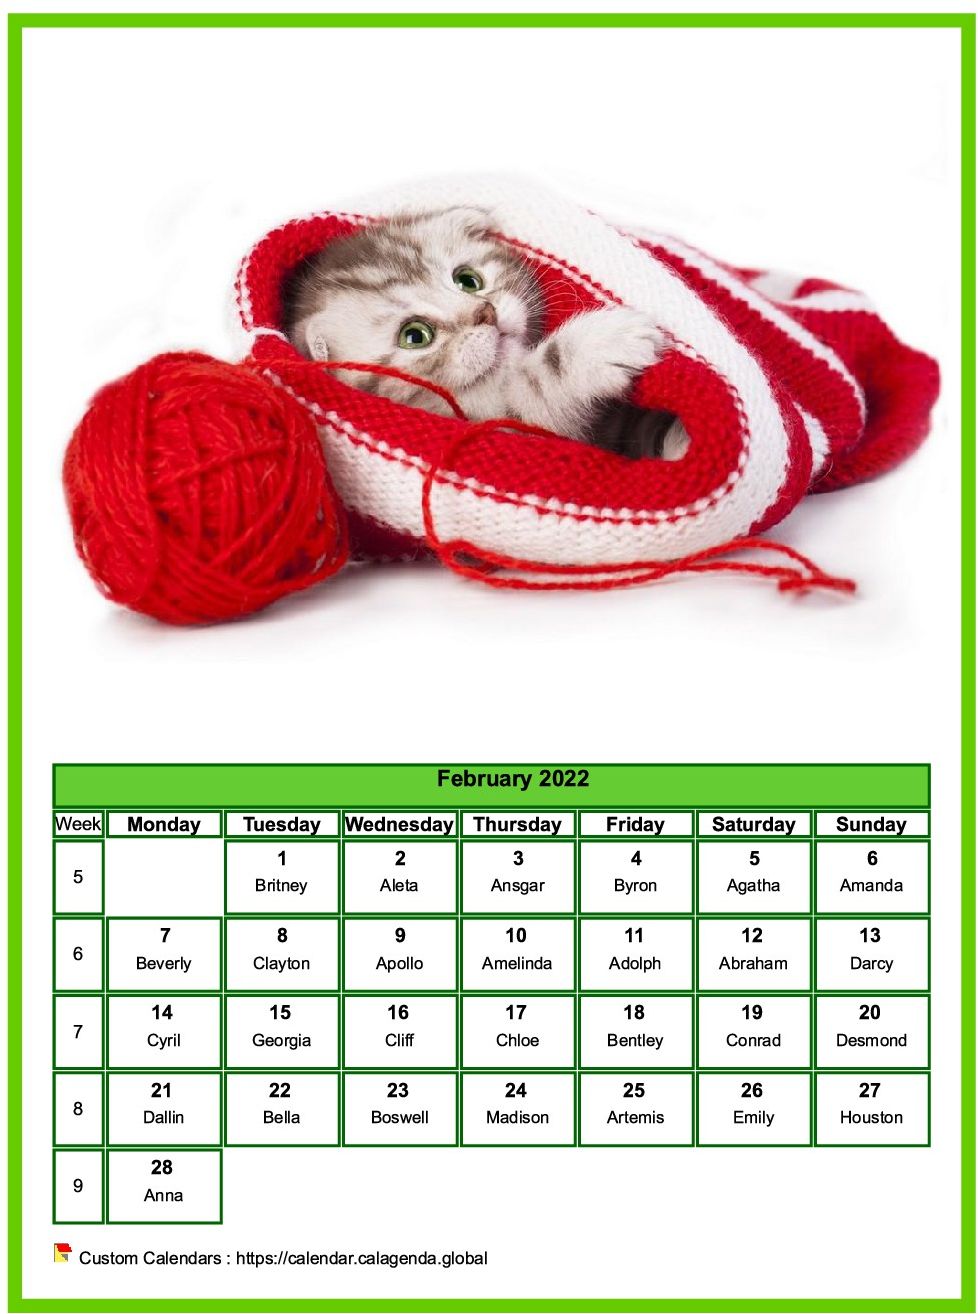 Calendar February 2022 cats